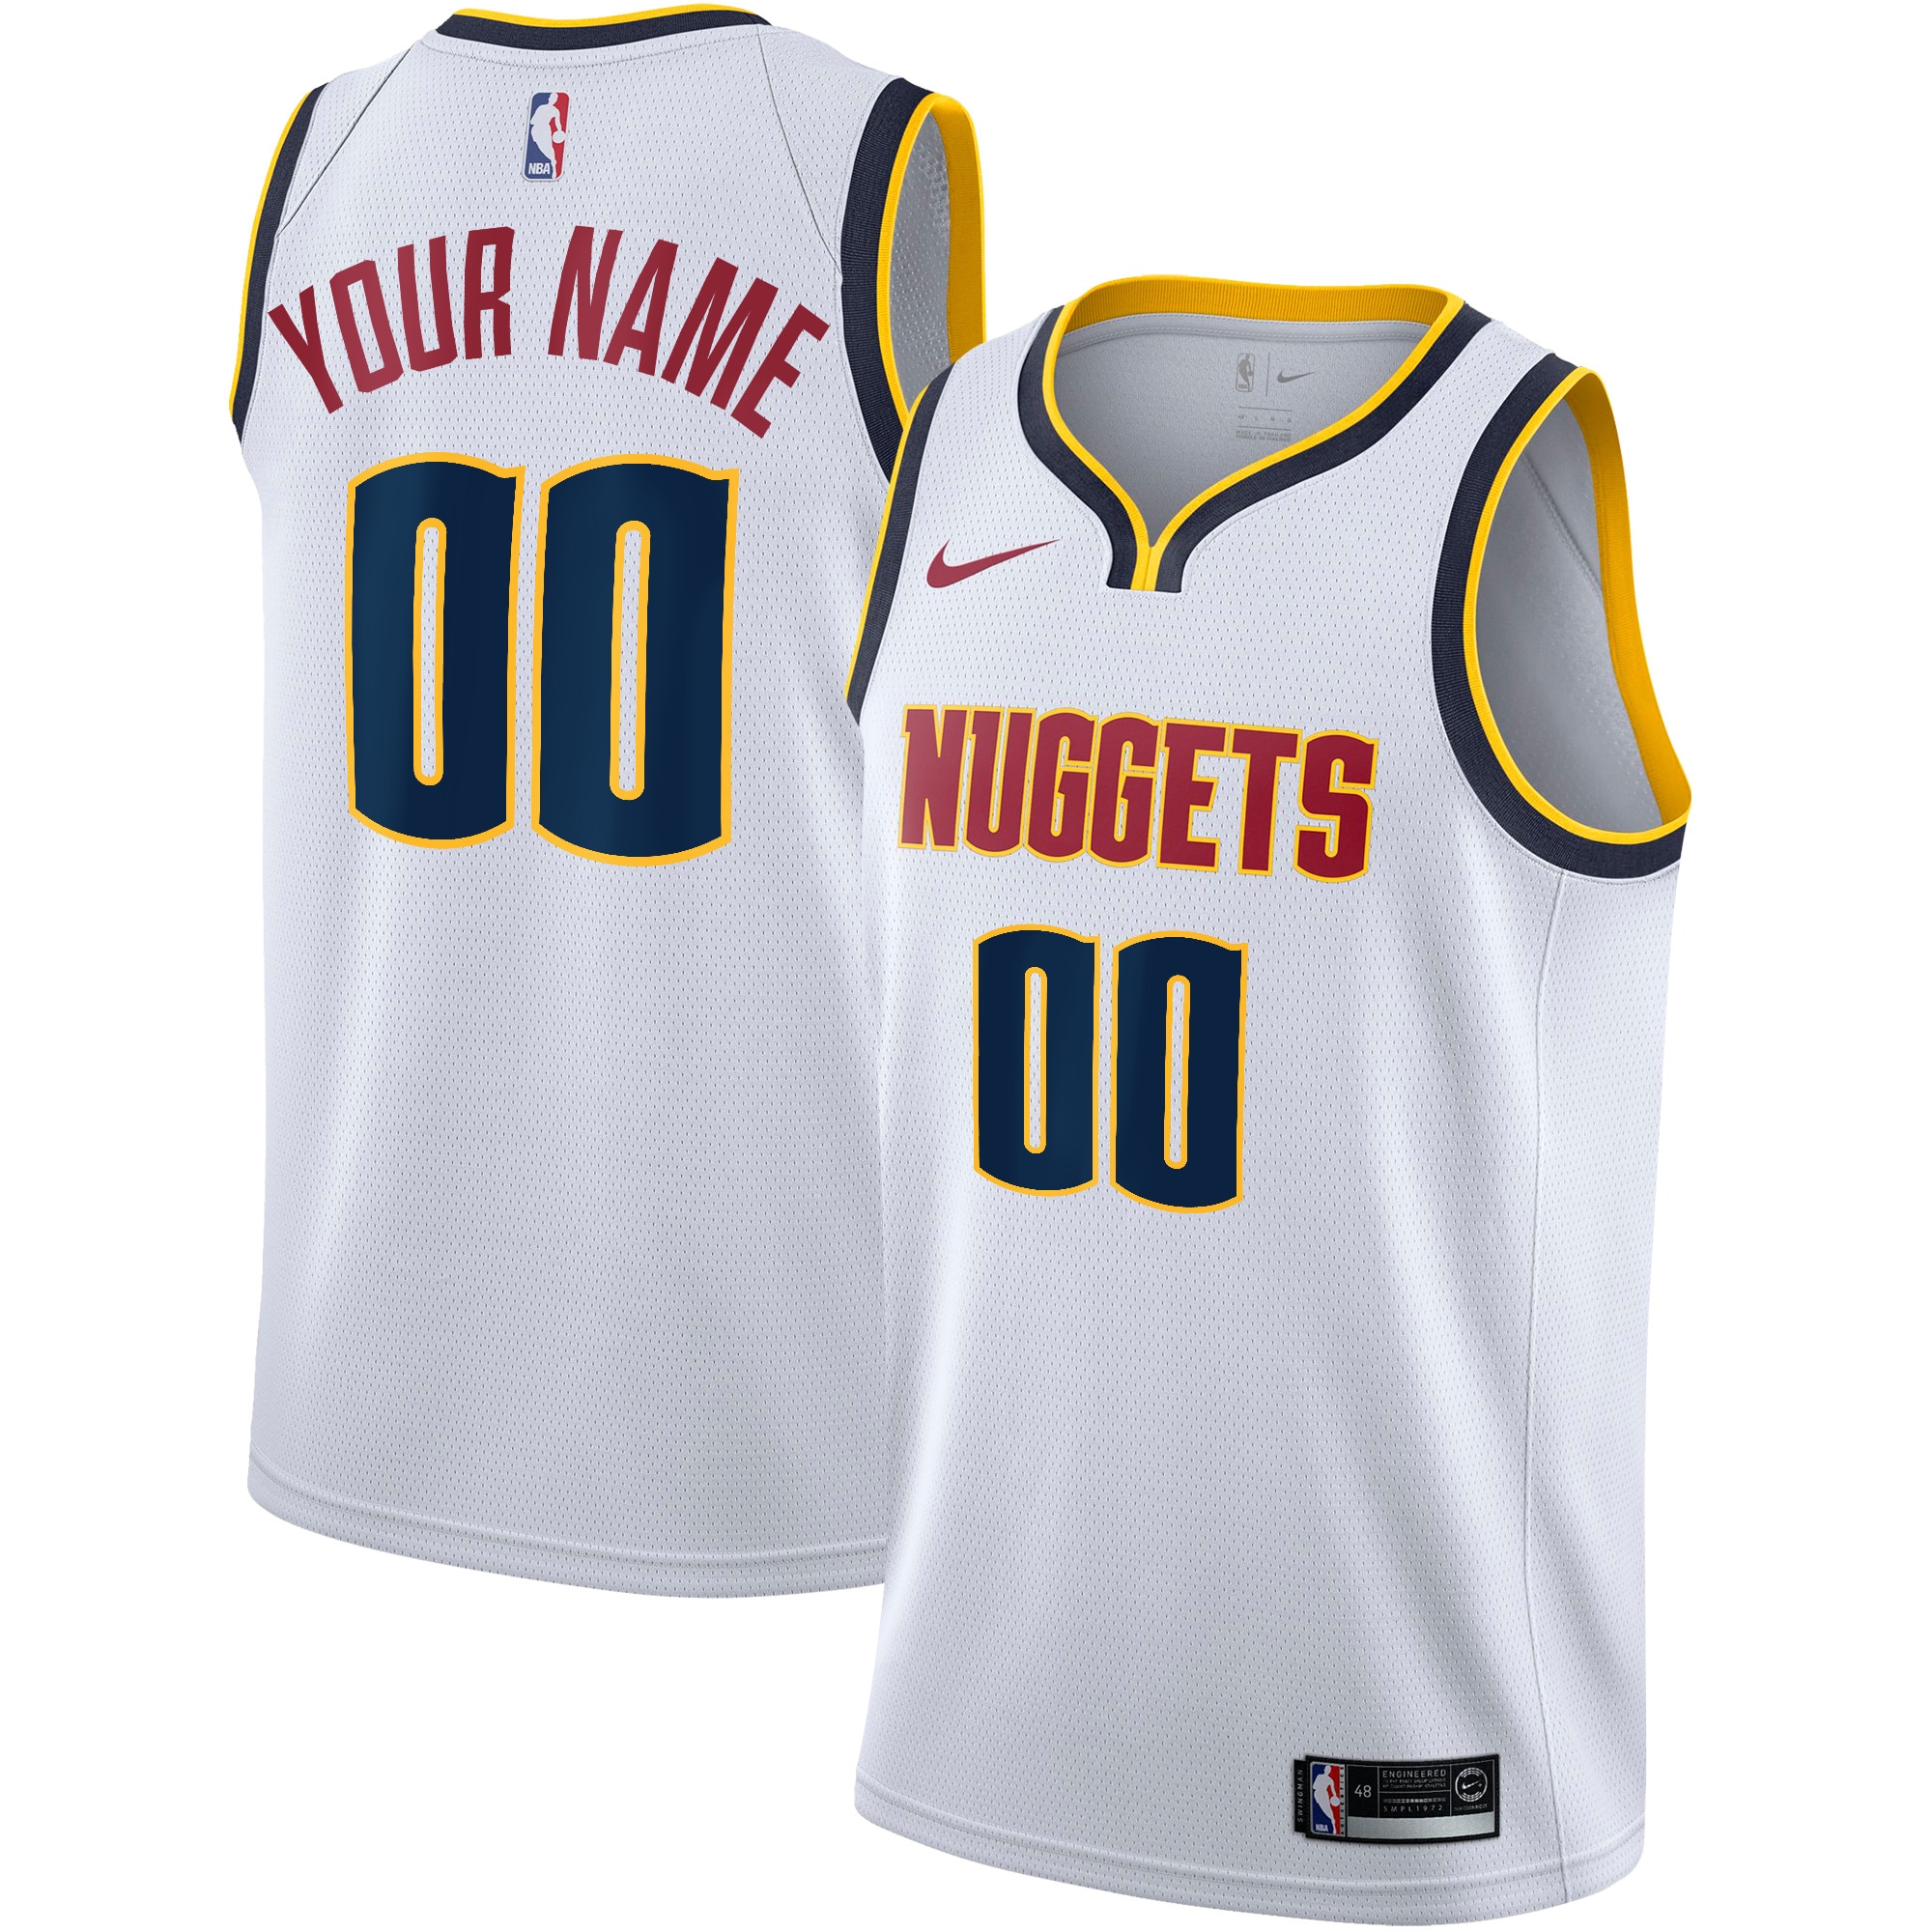 nuggets custom jersey